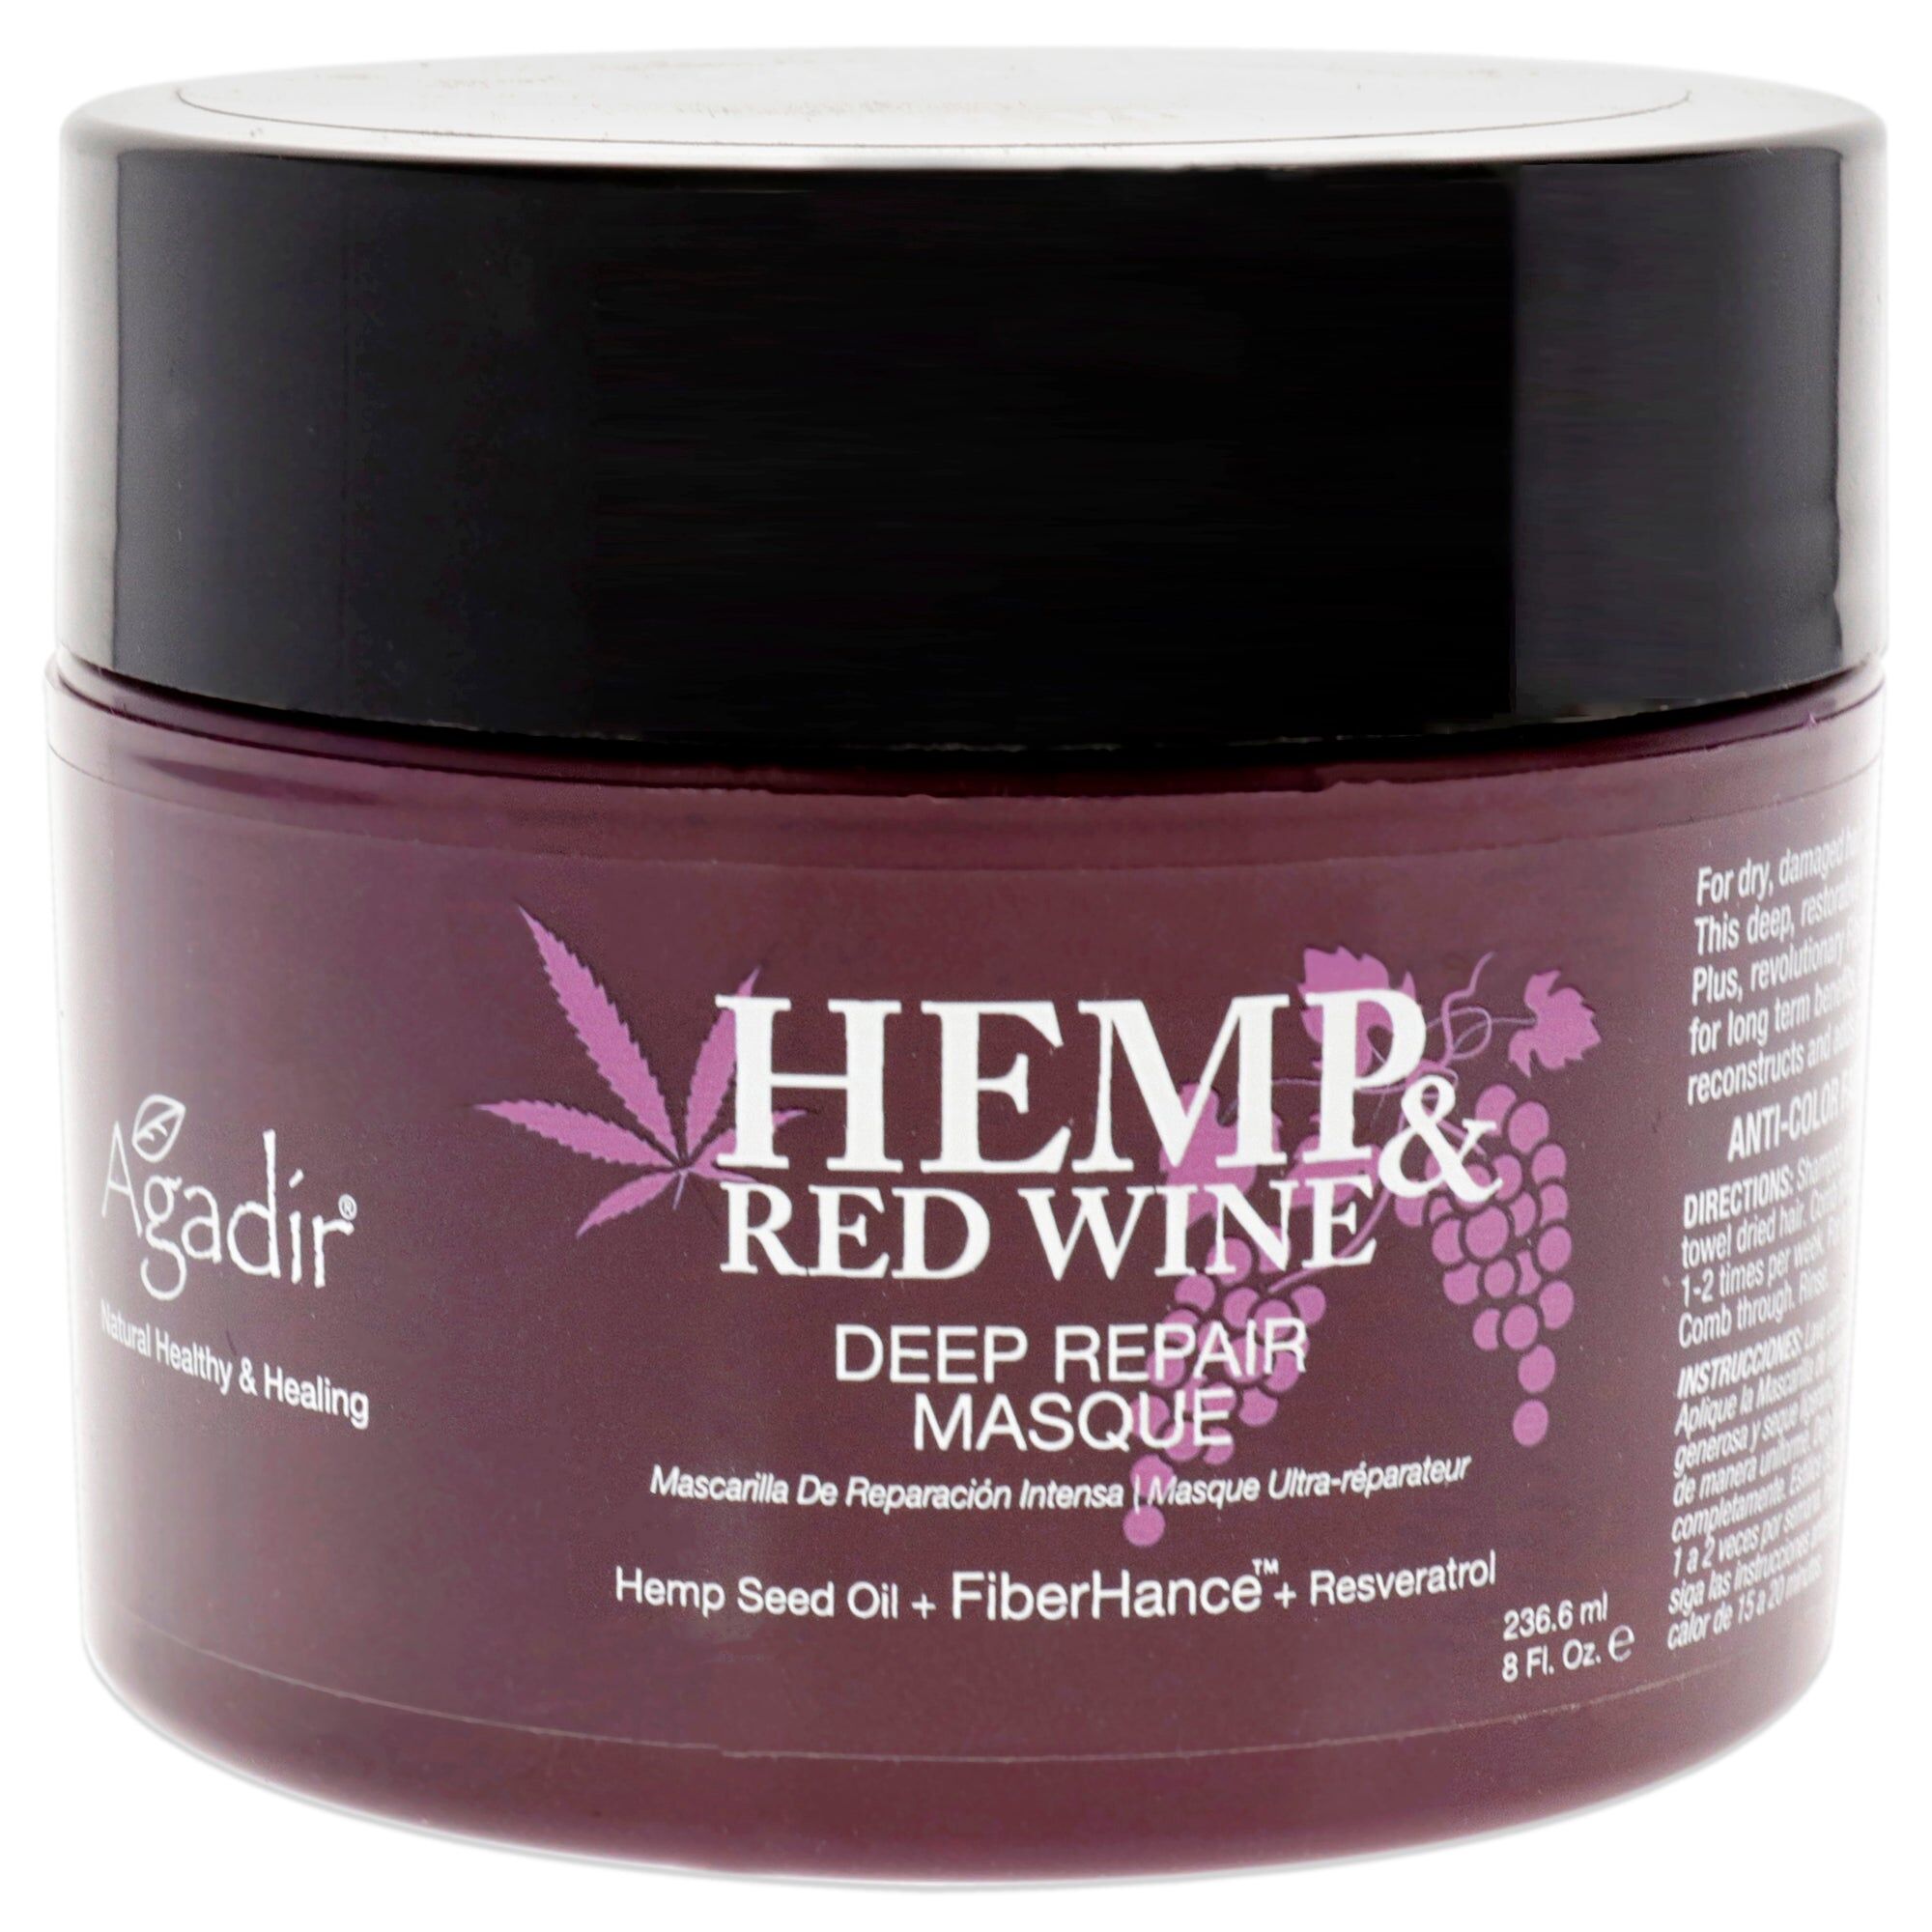 Hemp and Red Wine Deep Repair Masque by Agadir for Unisex - 8 oz Masque 8.0 oz unisex